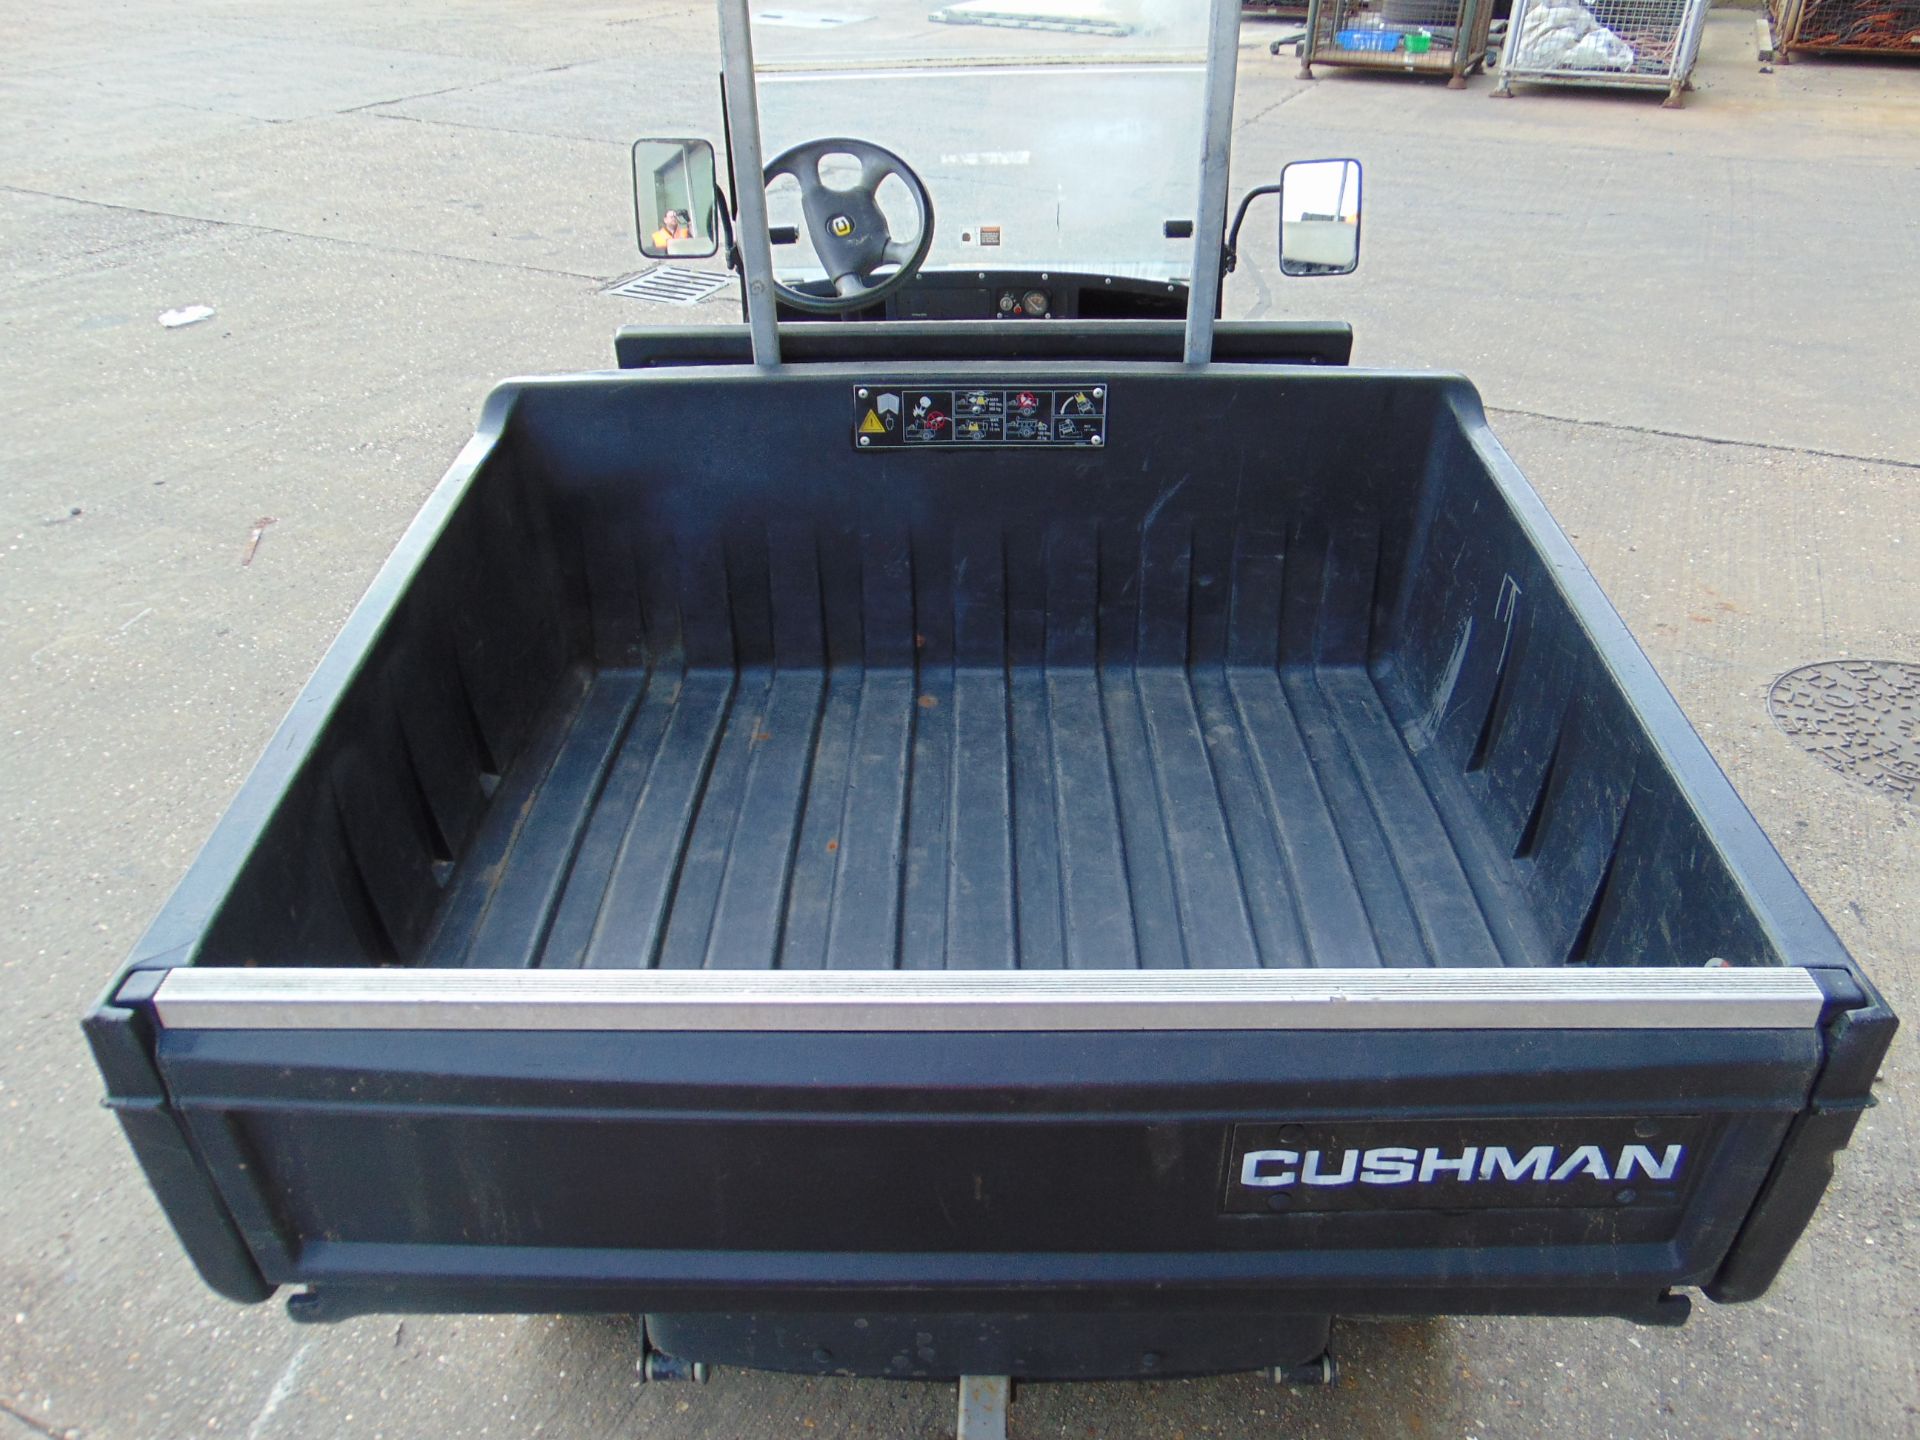 Cushman Hauler 1200 Petrol Utility Vehicle - Image 9 of 26